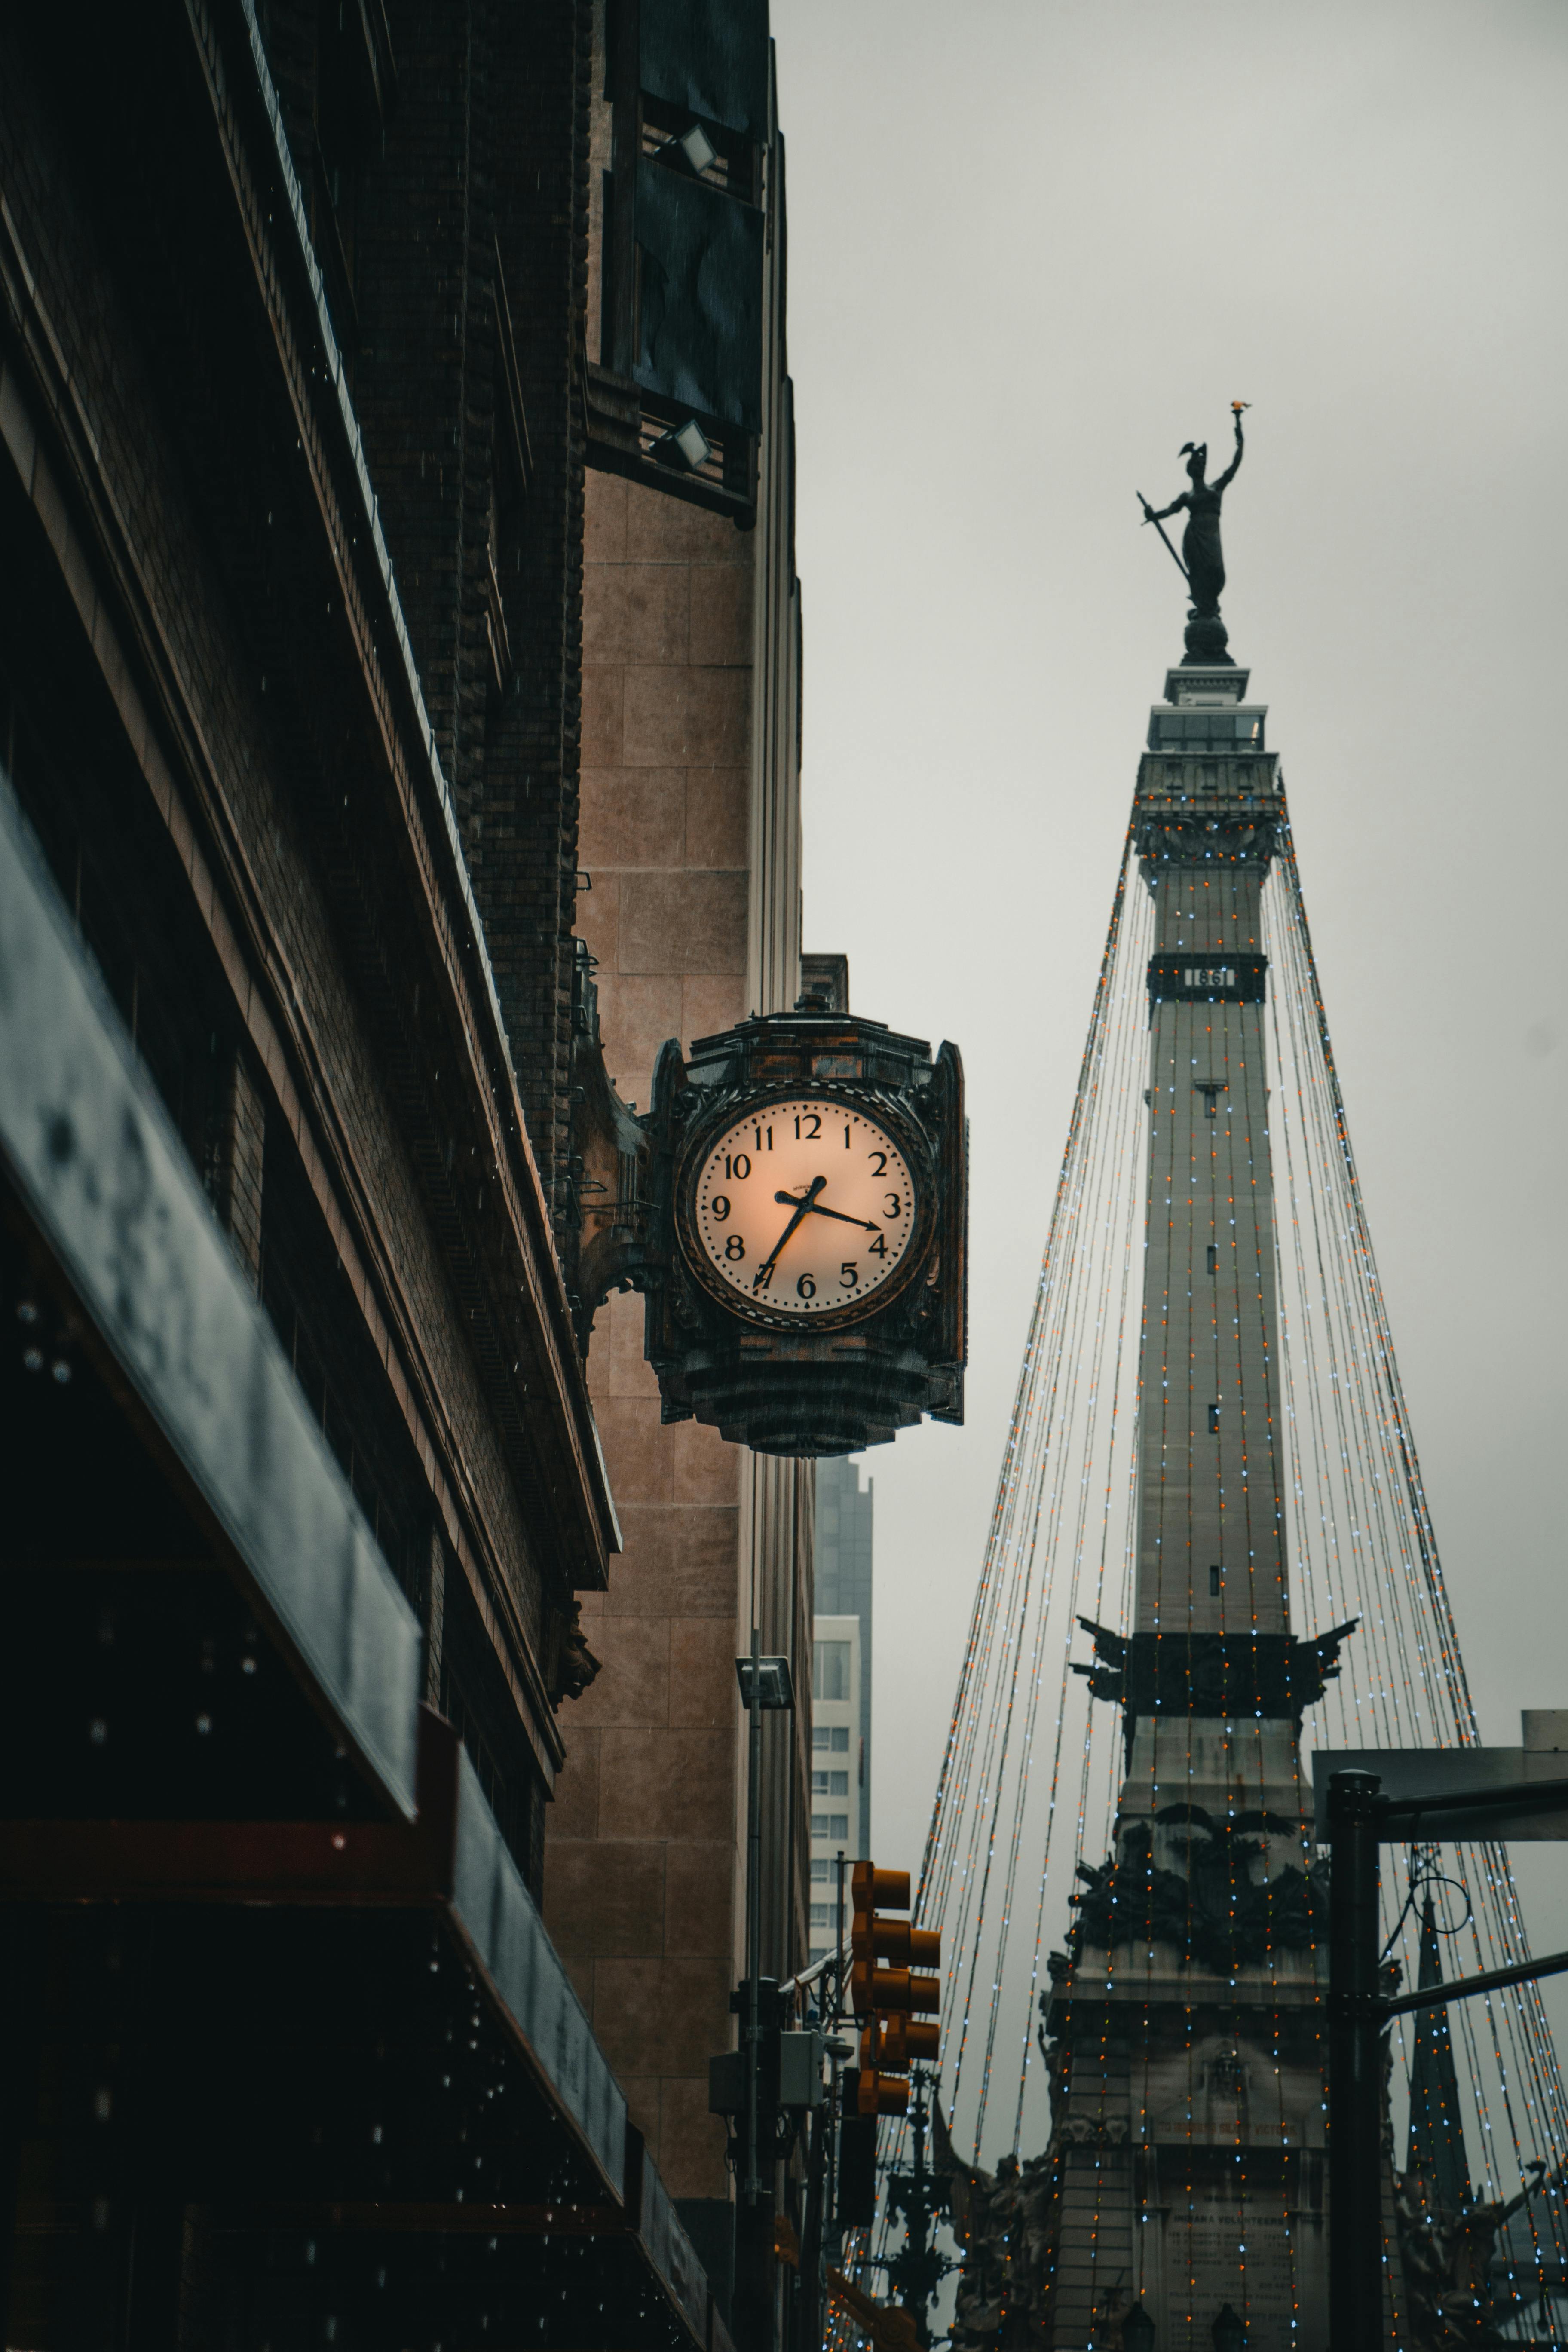 London's most famous clock tower Big Ben 4K wallpaper download